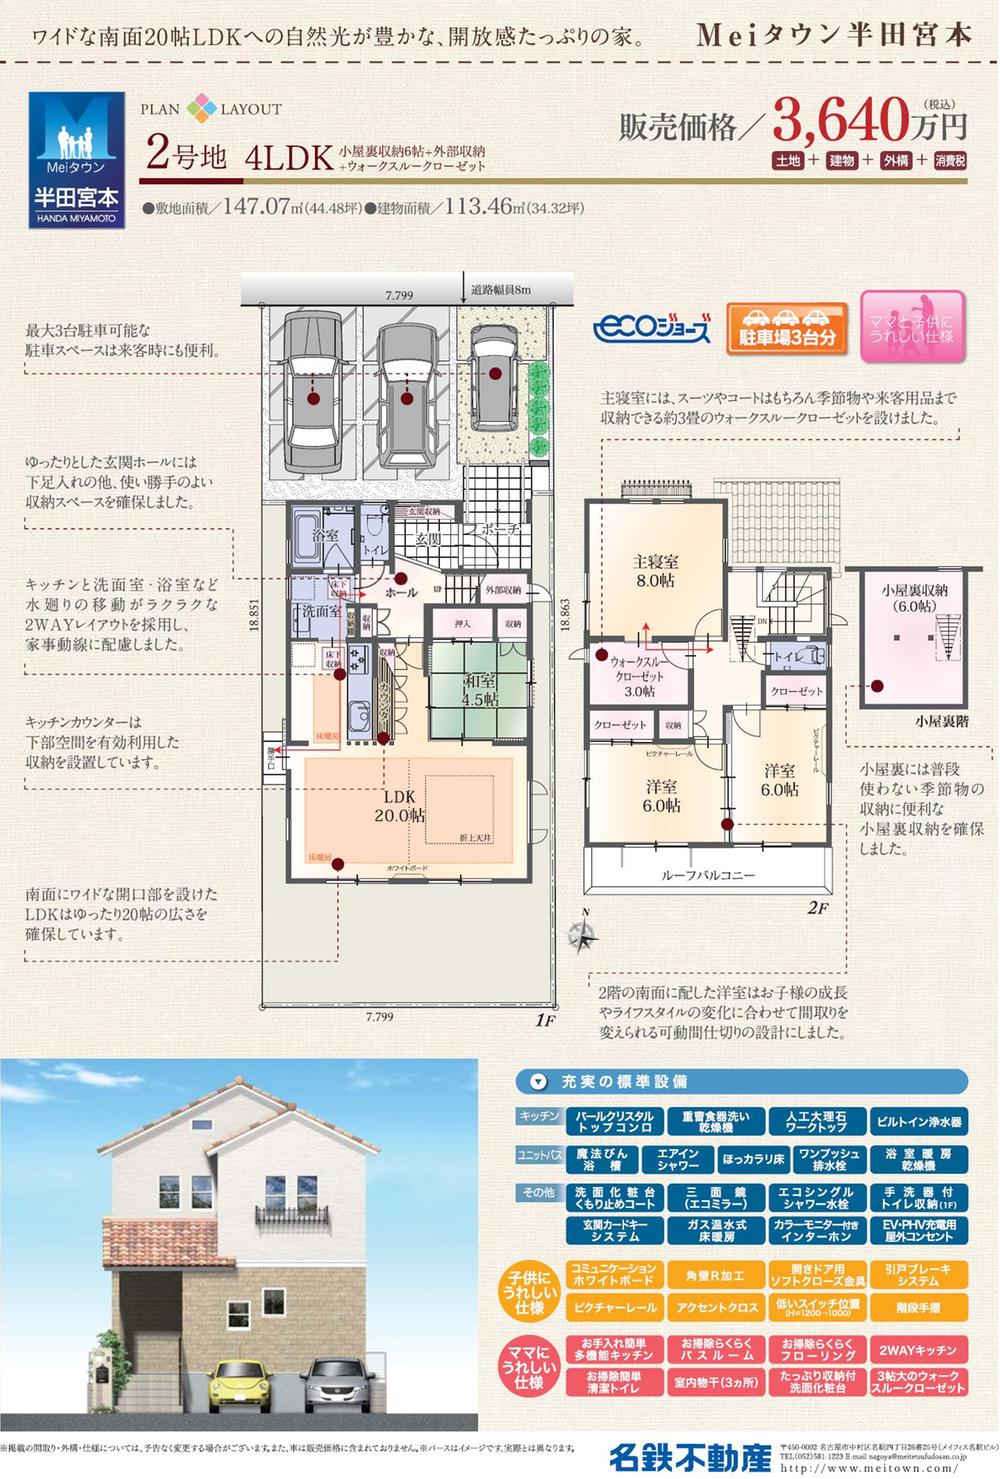 Floor plan. (No. 2 locations), Price 36,400,000 yen, 4LDK, Land area 147.07 sq m , Building area 113.46 sq m